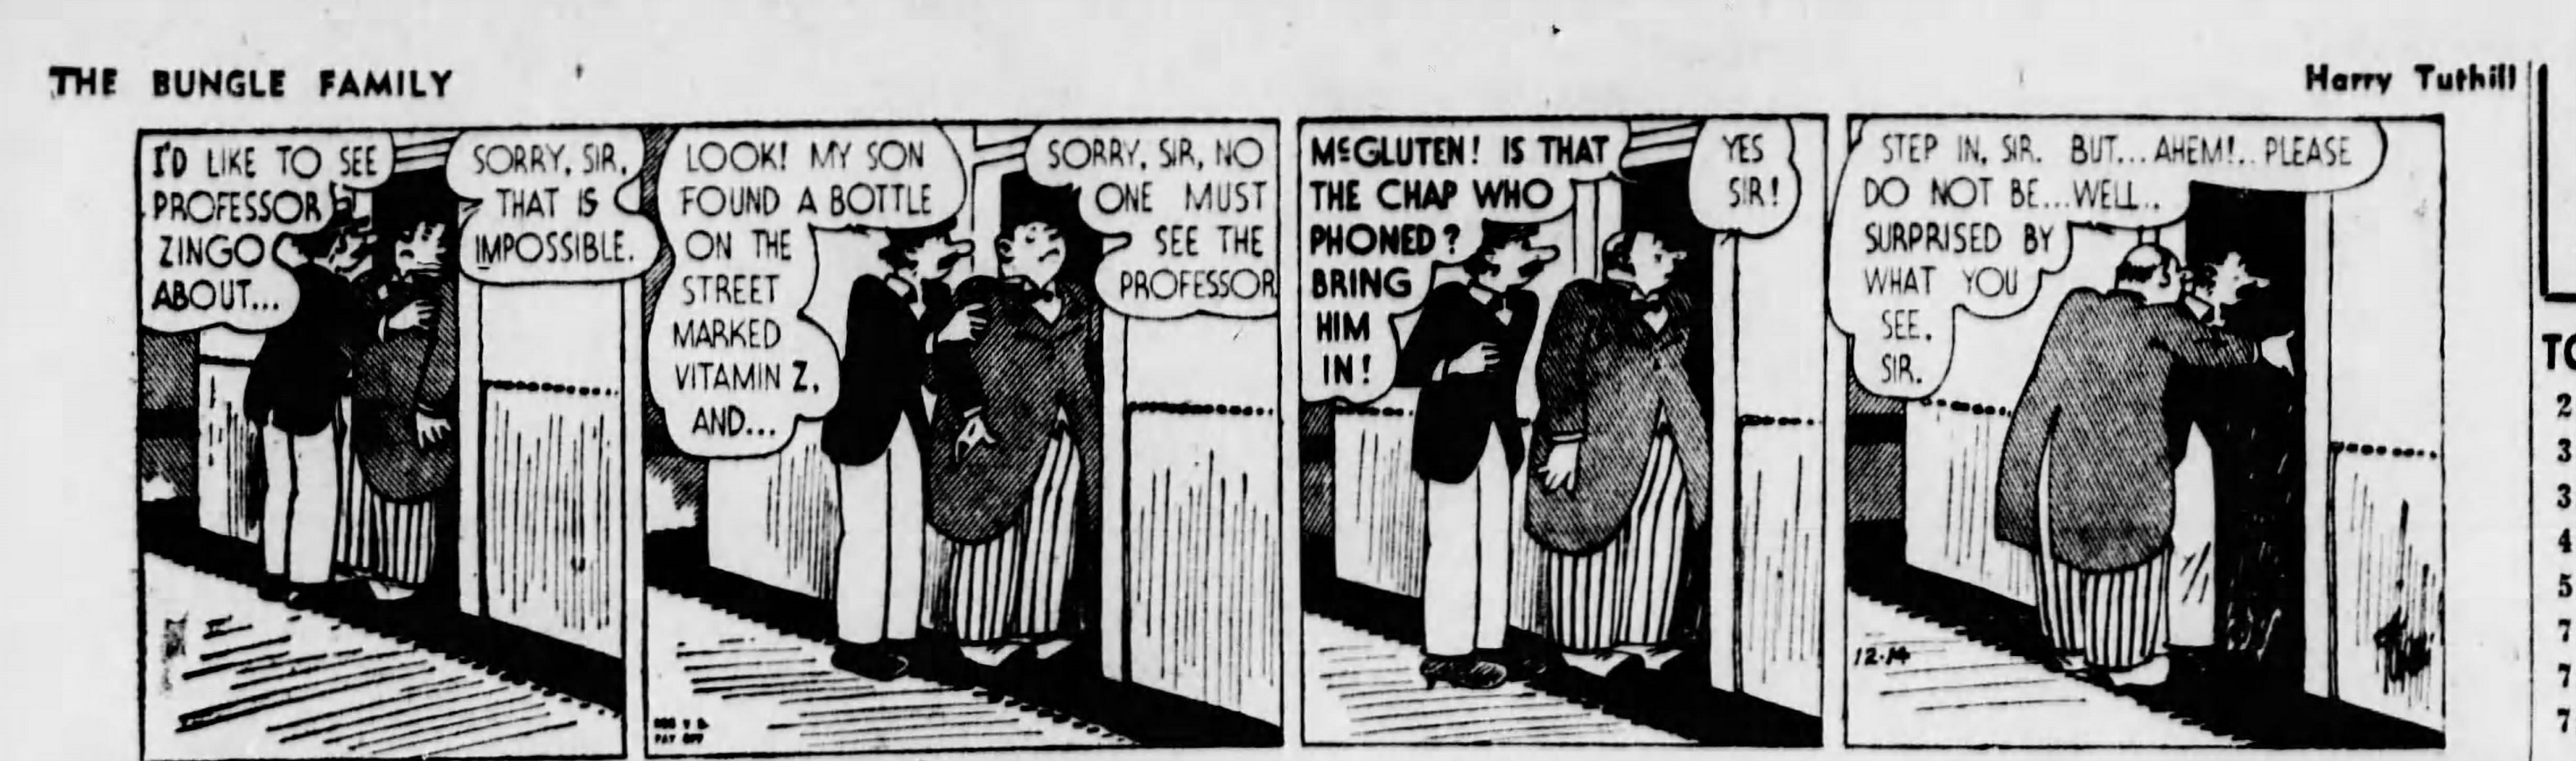 The_Brooklyn_Daily_Eagle_Tue__Dec_14__1943_(5).jpg